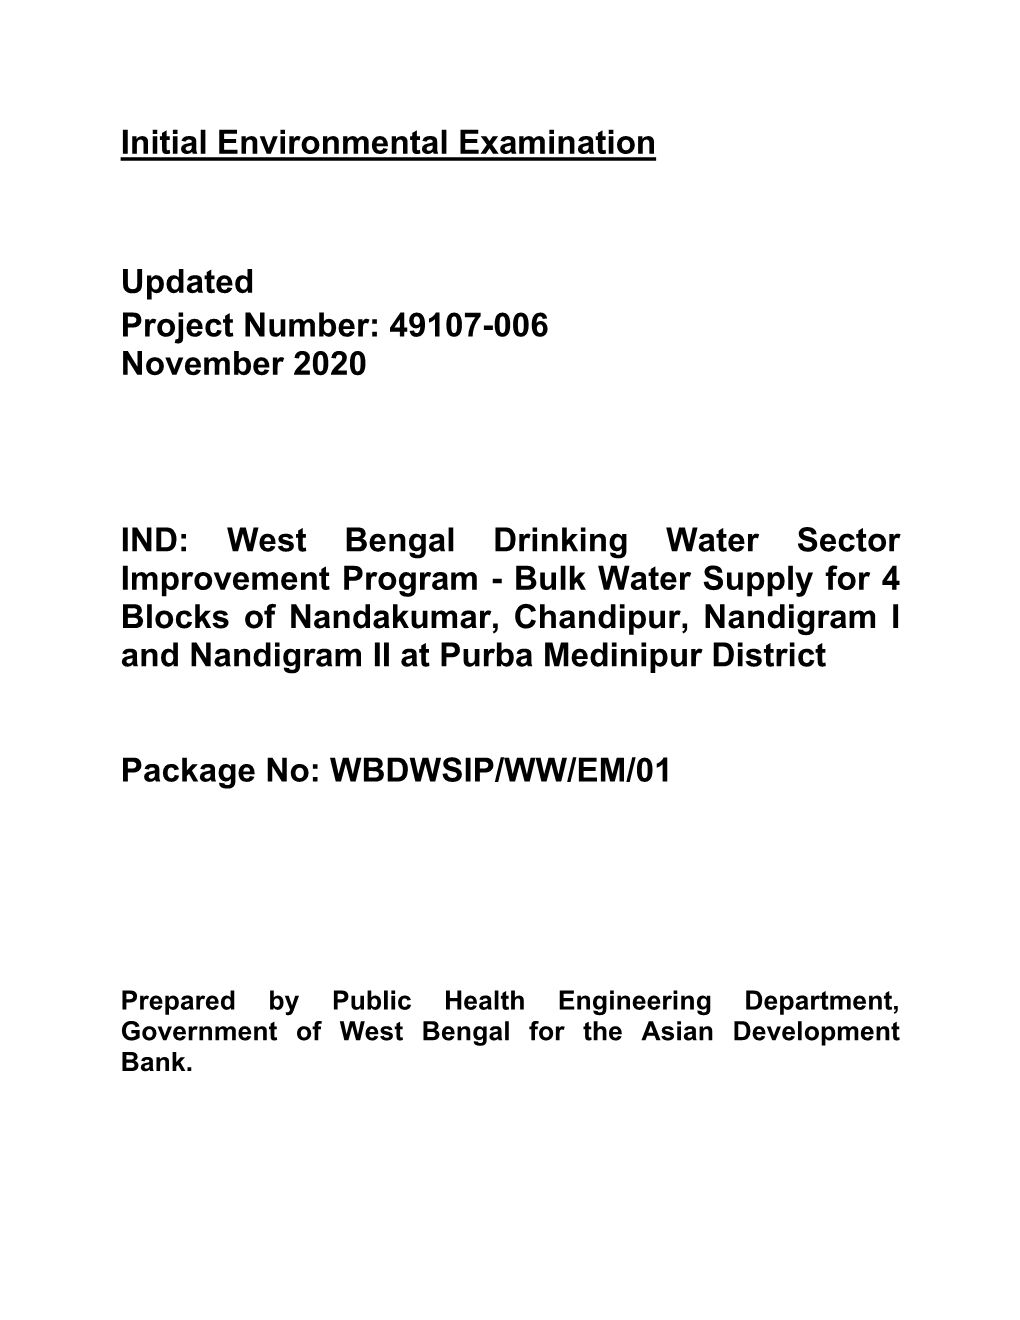 West Bengal Drinking Water Sector Improvement Program: Bulk Water Supply for 4 Blocks of Nandakumar, Chandipur, Nandigram I